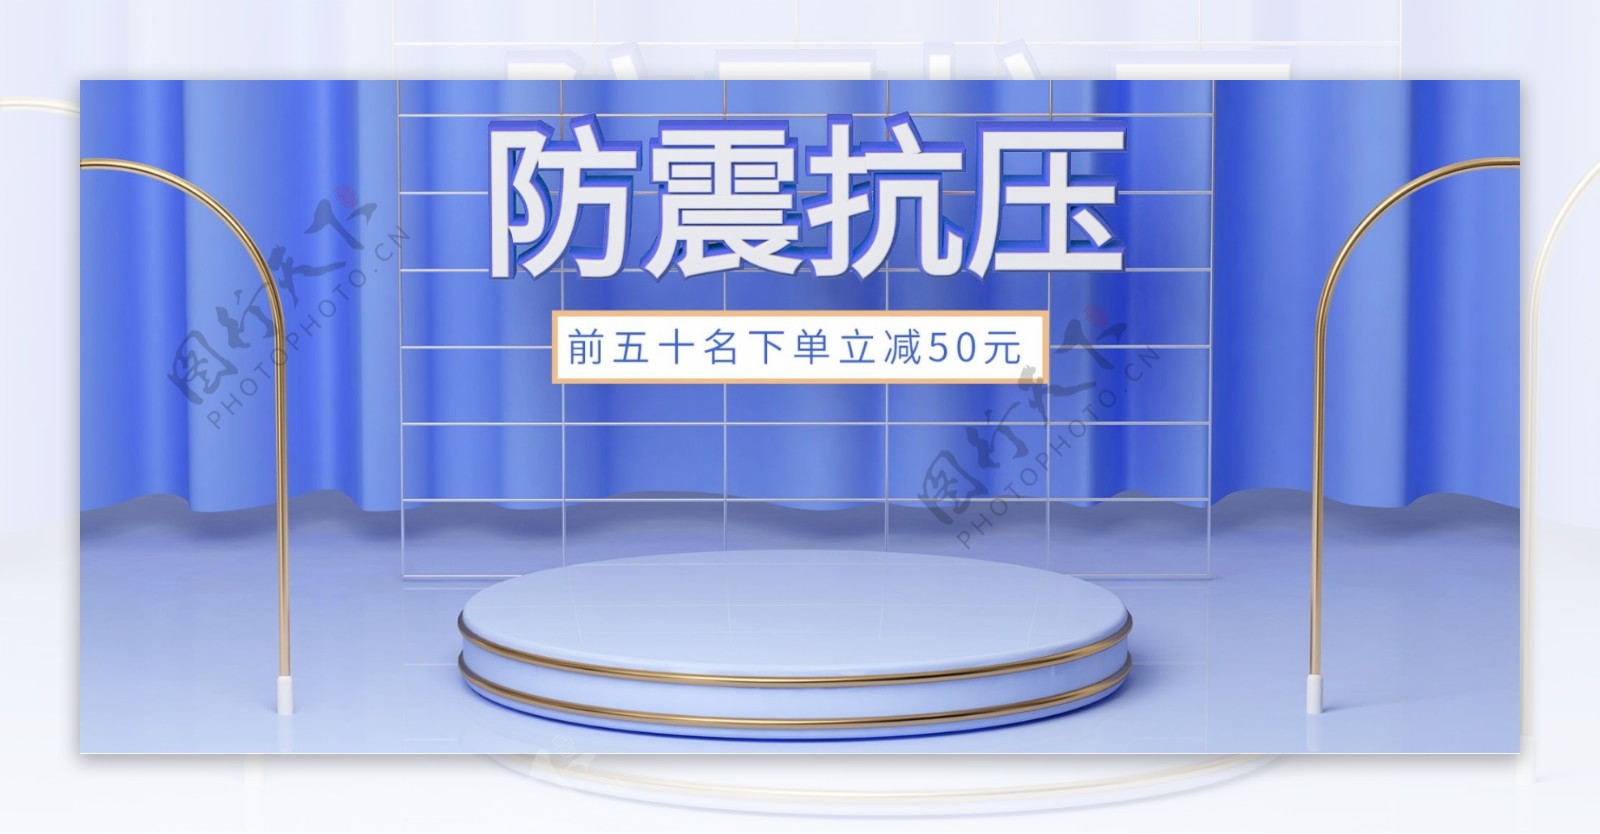 C4D简约蓝色工具箱电商海报banner